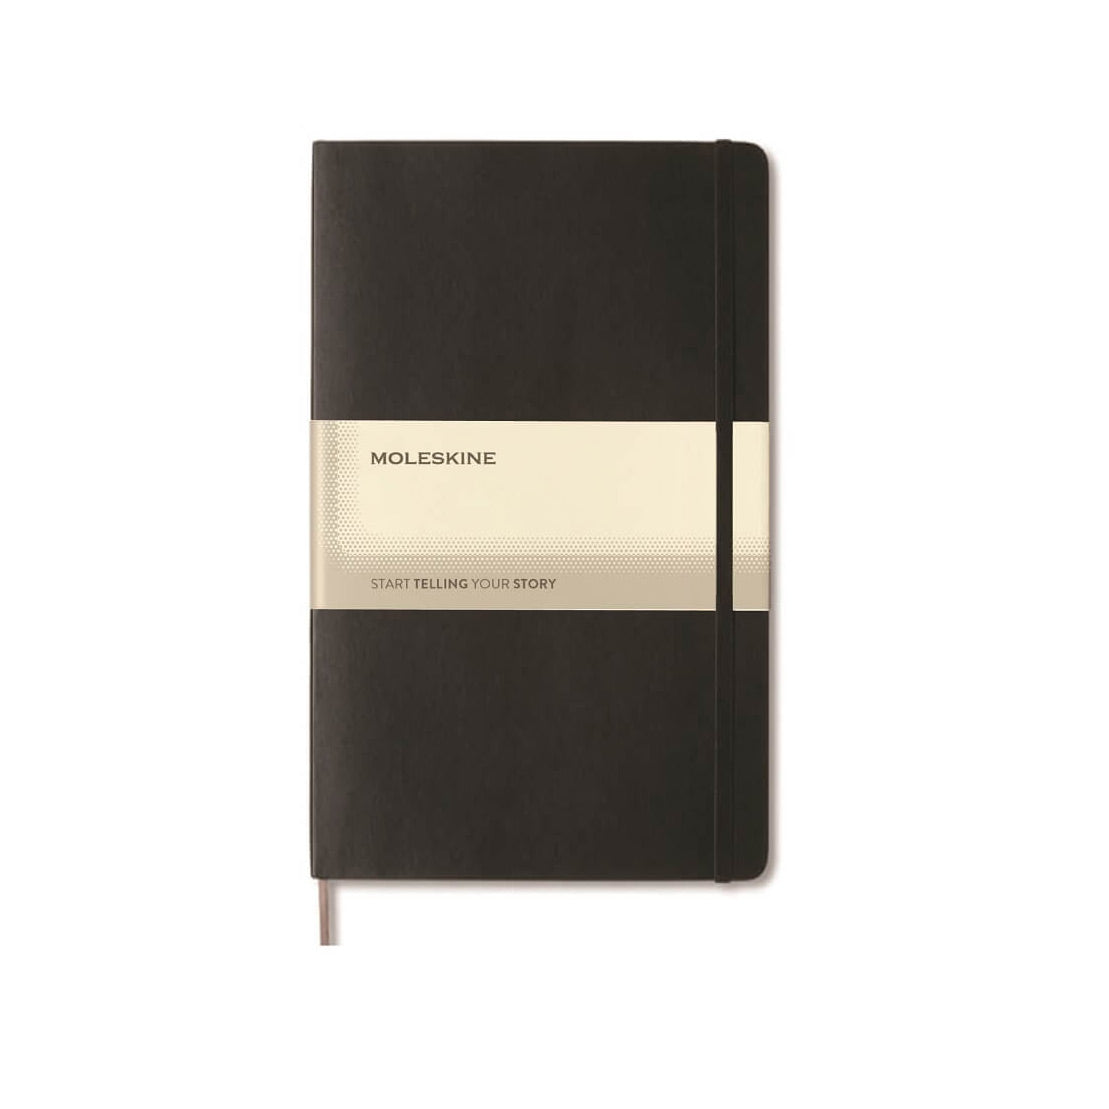 Moleskine Classic Large Ruled Hard Cover Notebook Black